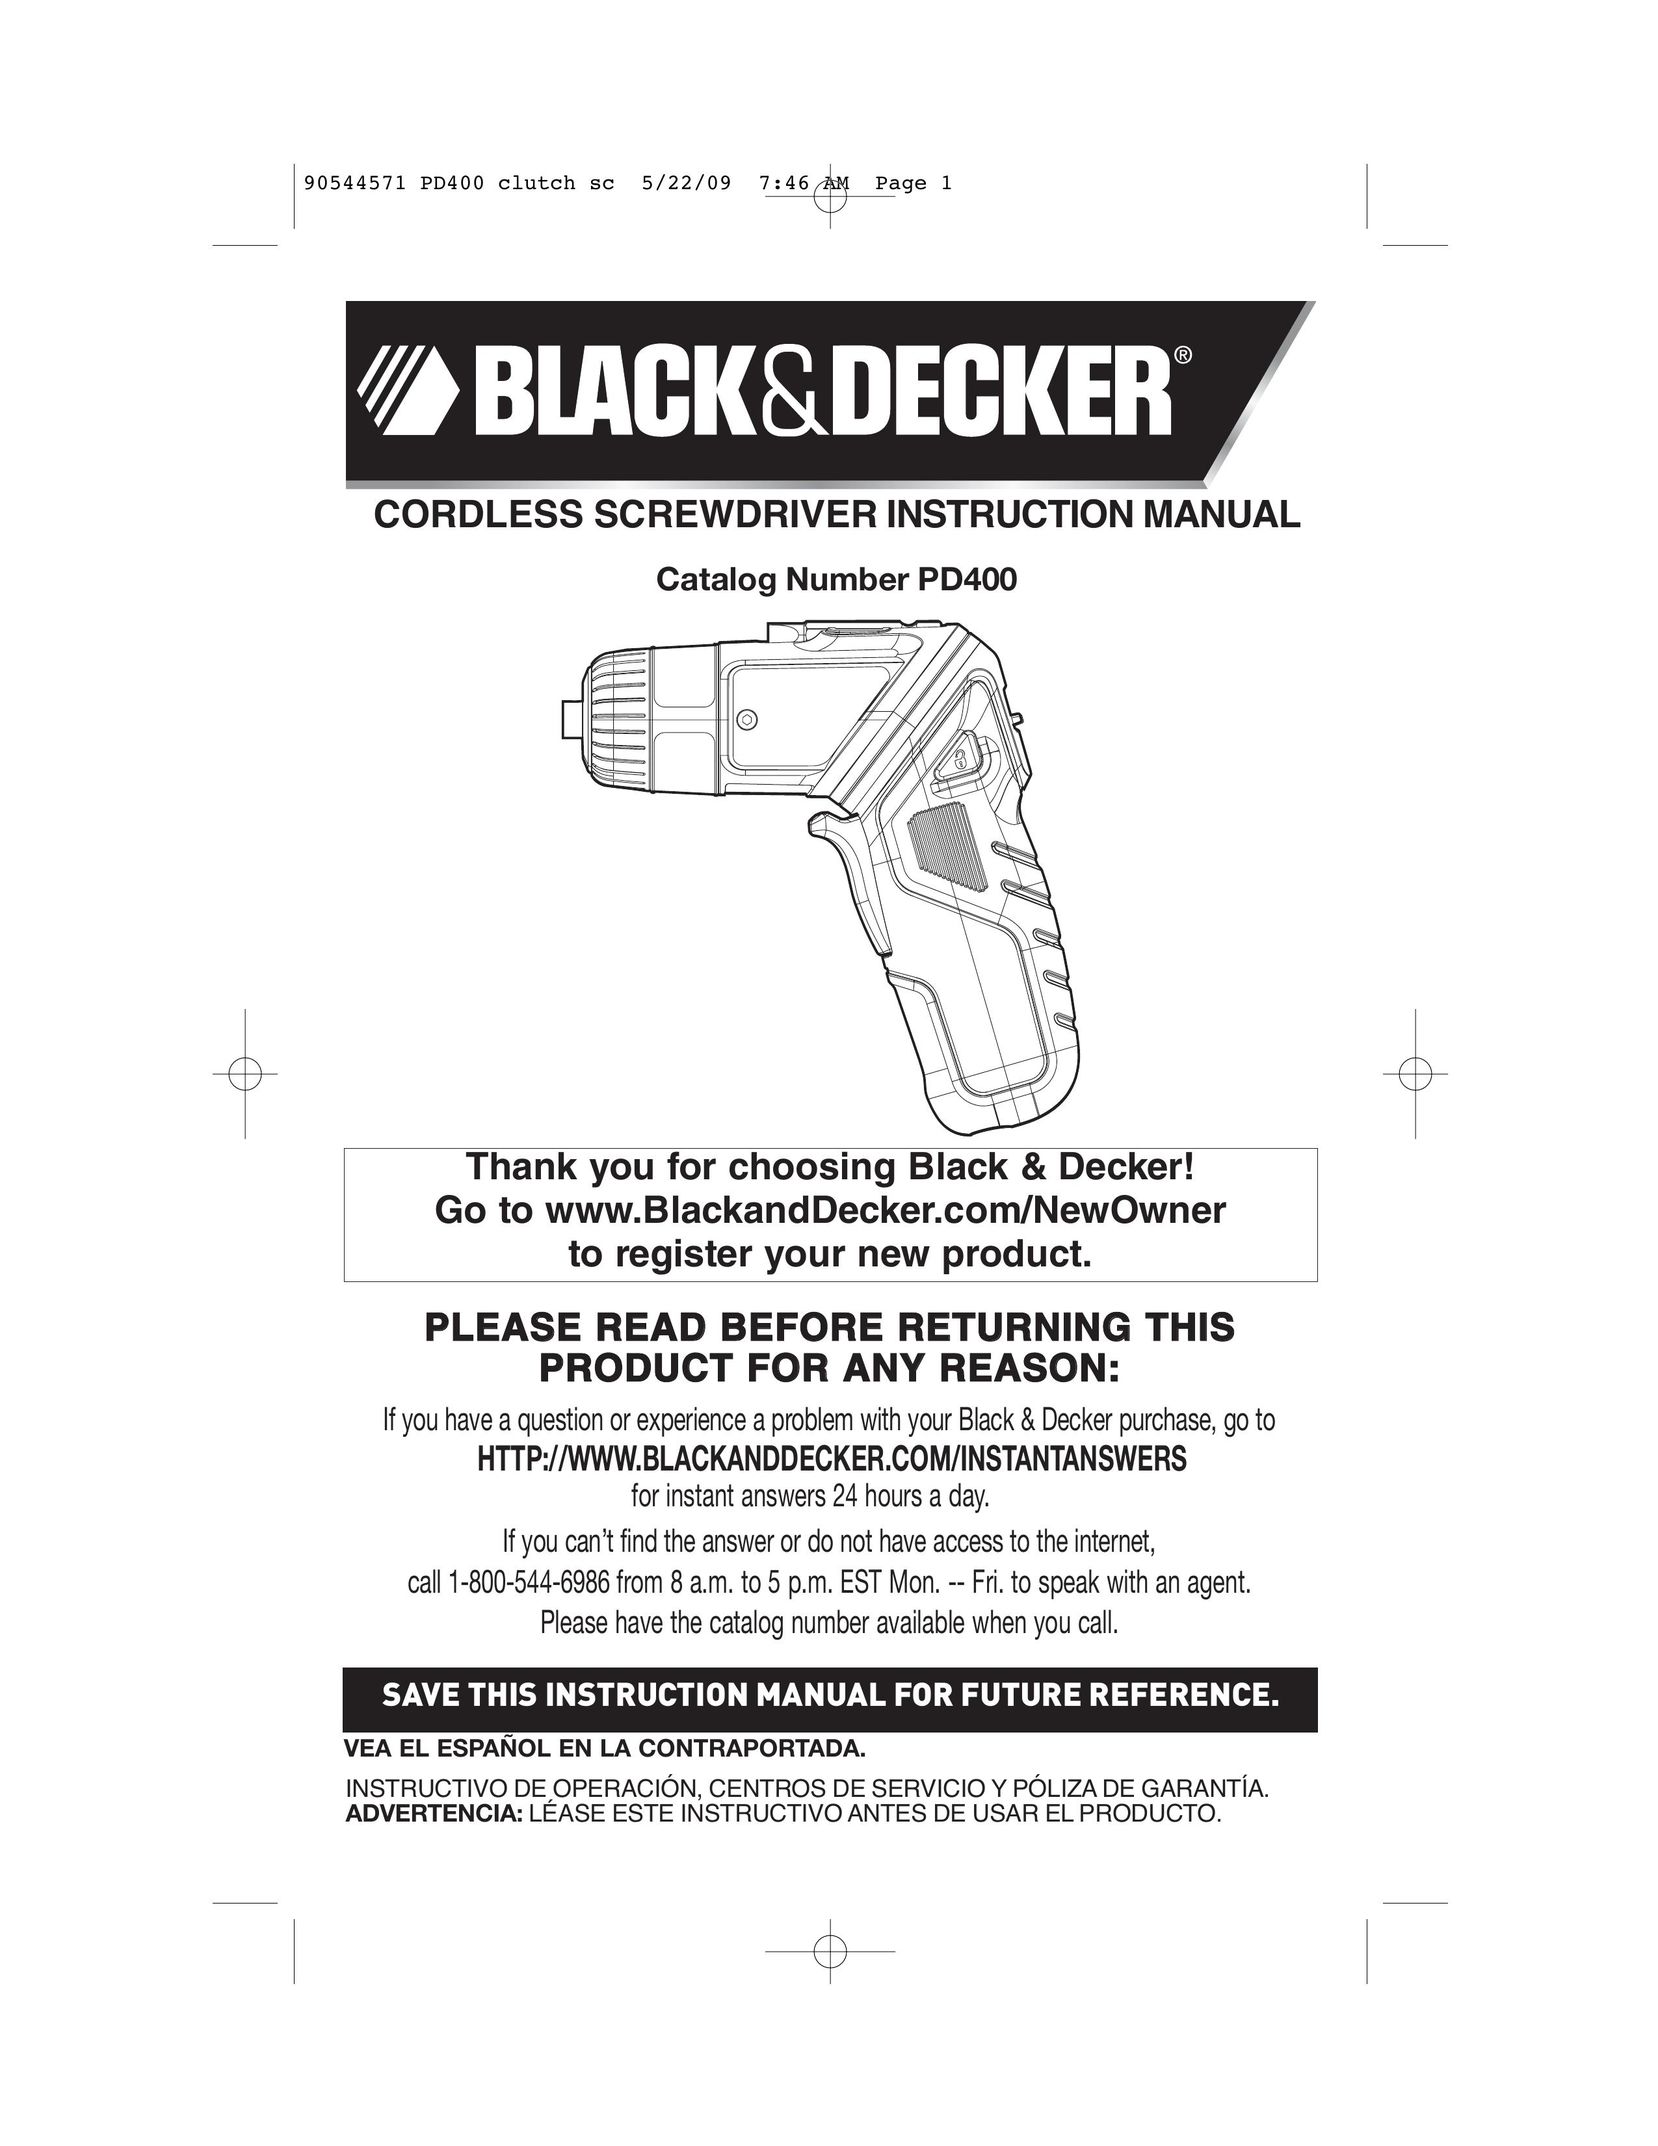 Black & Decker 90544571 Power Screwdriver User Manual